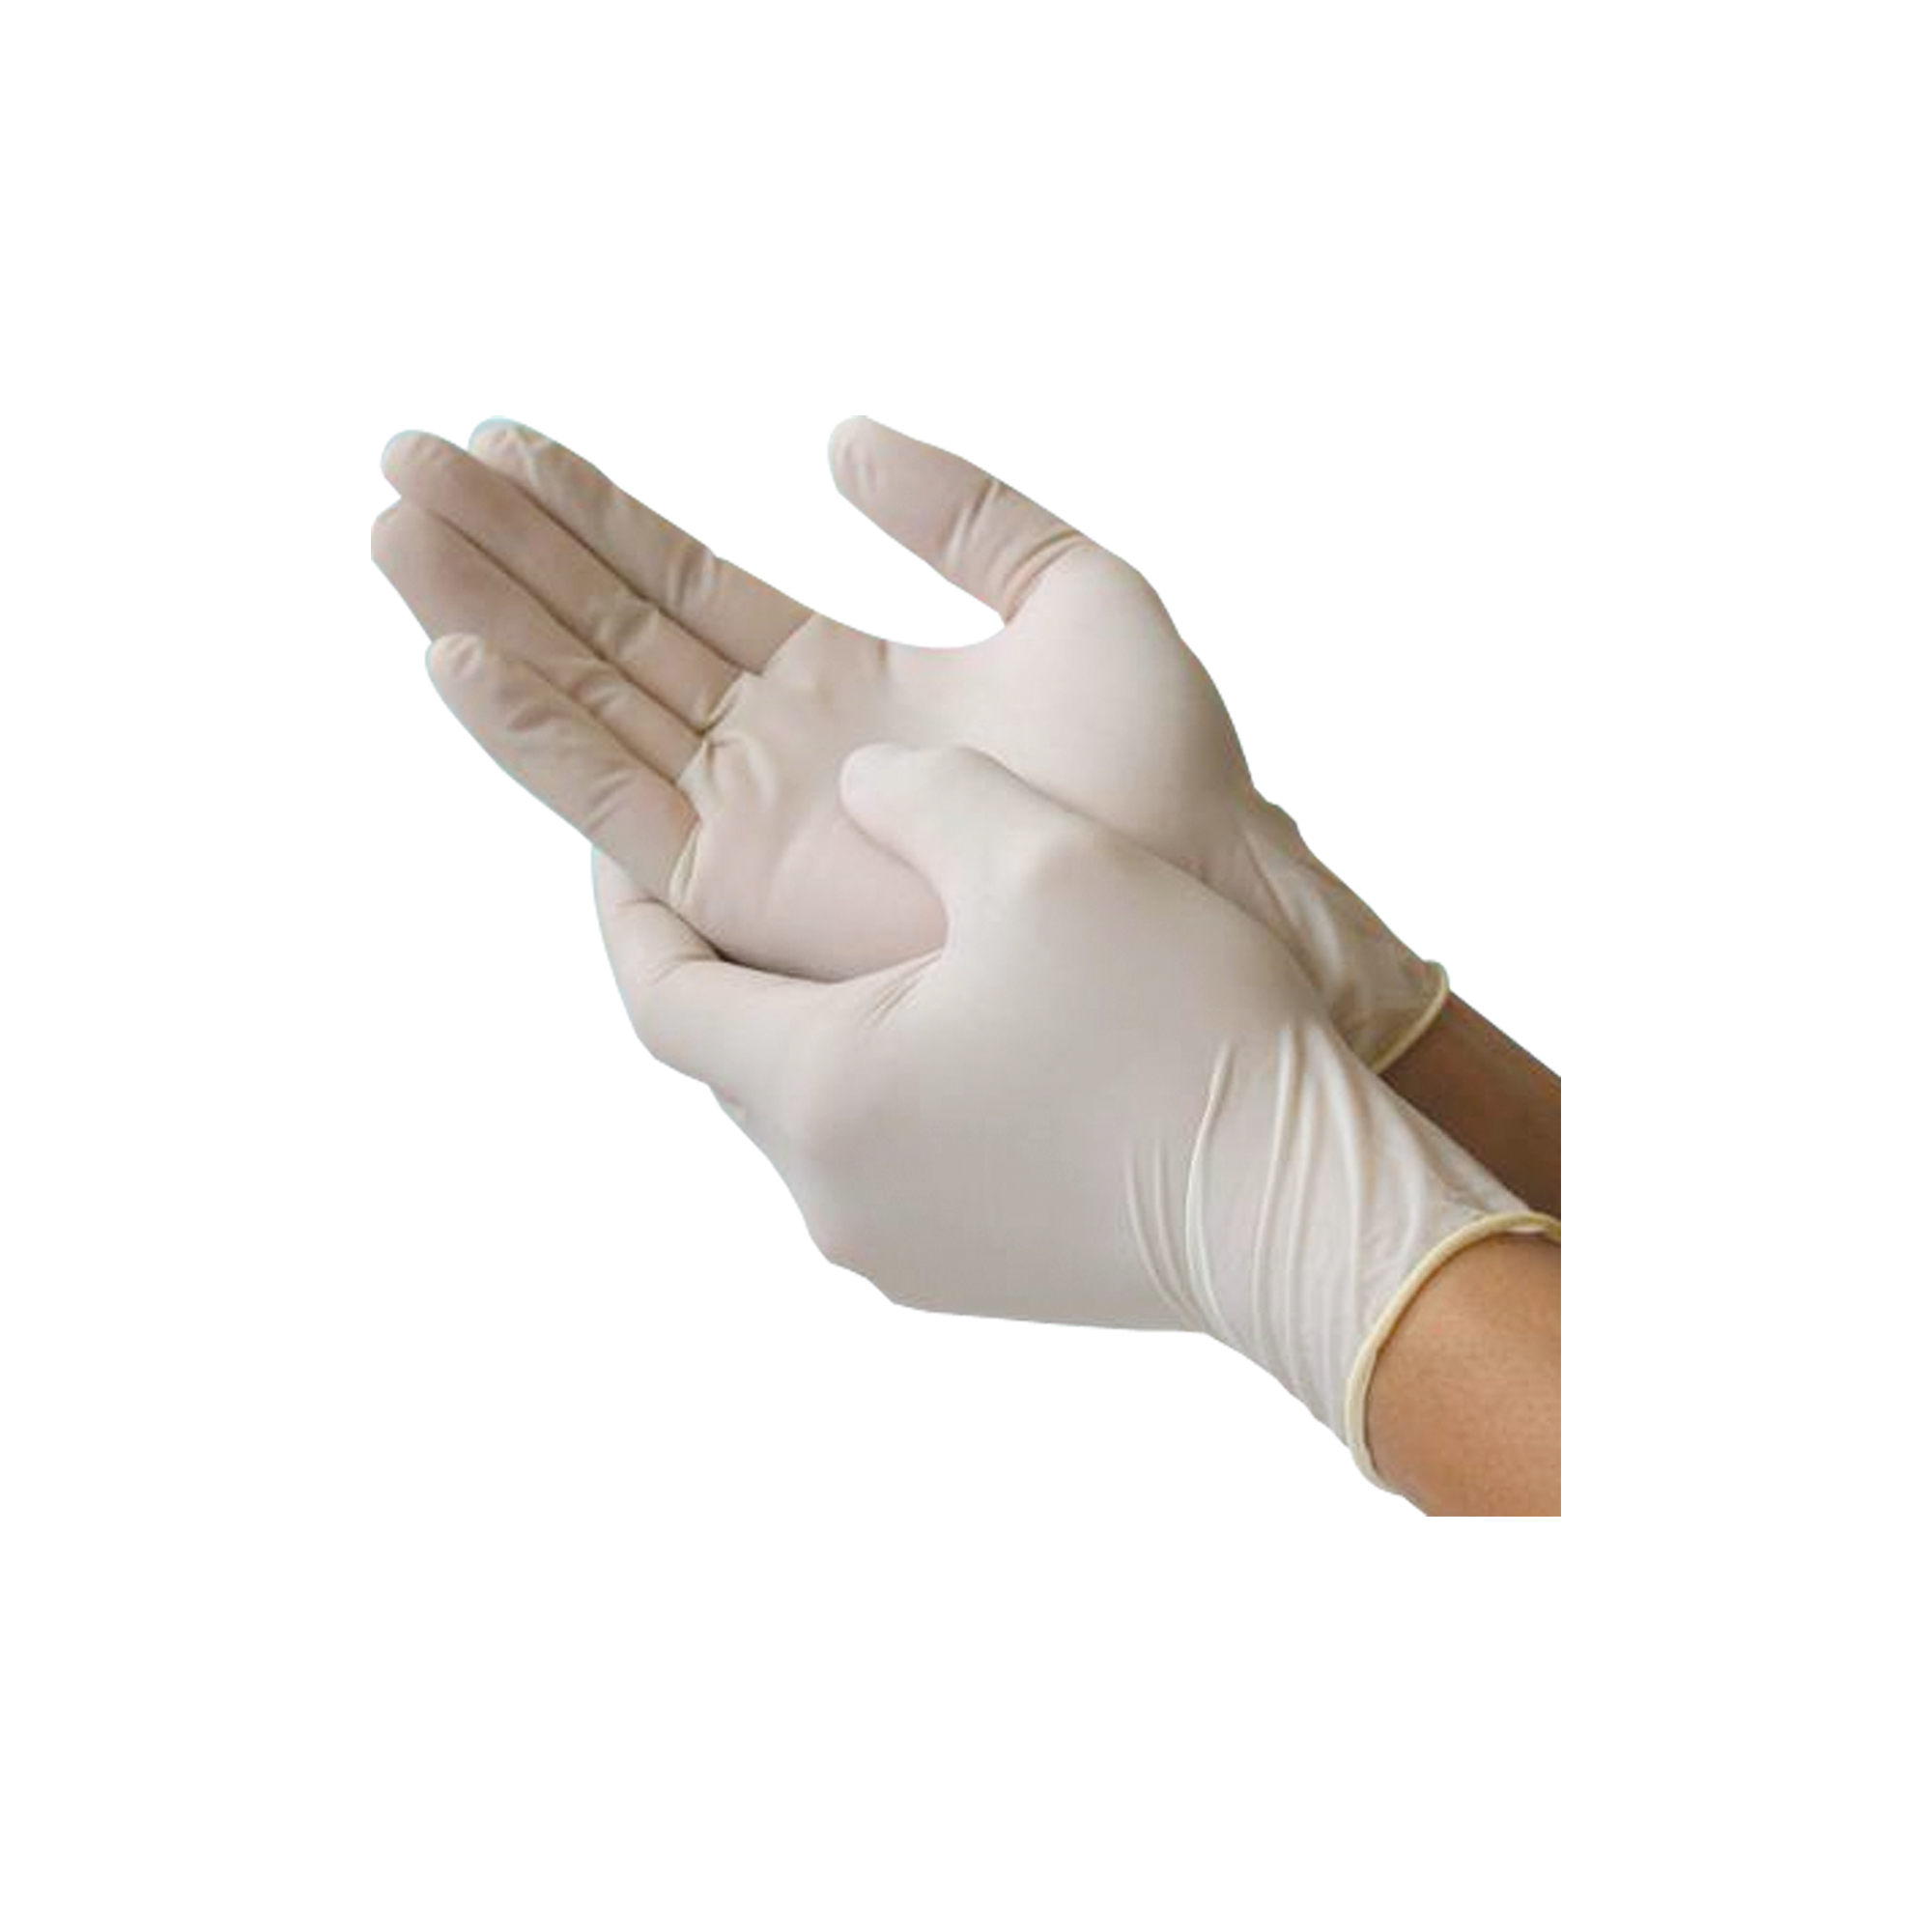 Gloves Vinyl Powder Free X Large - Pack 100 - Case 10